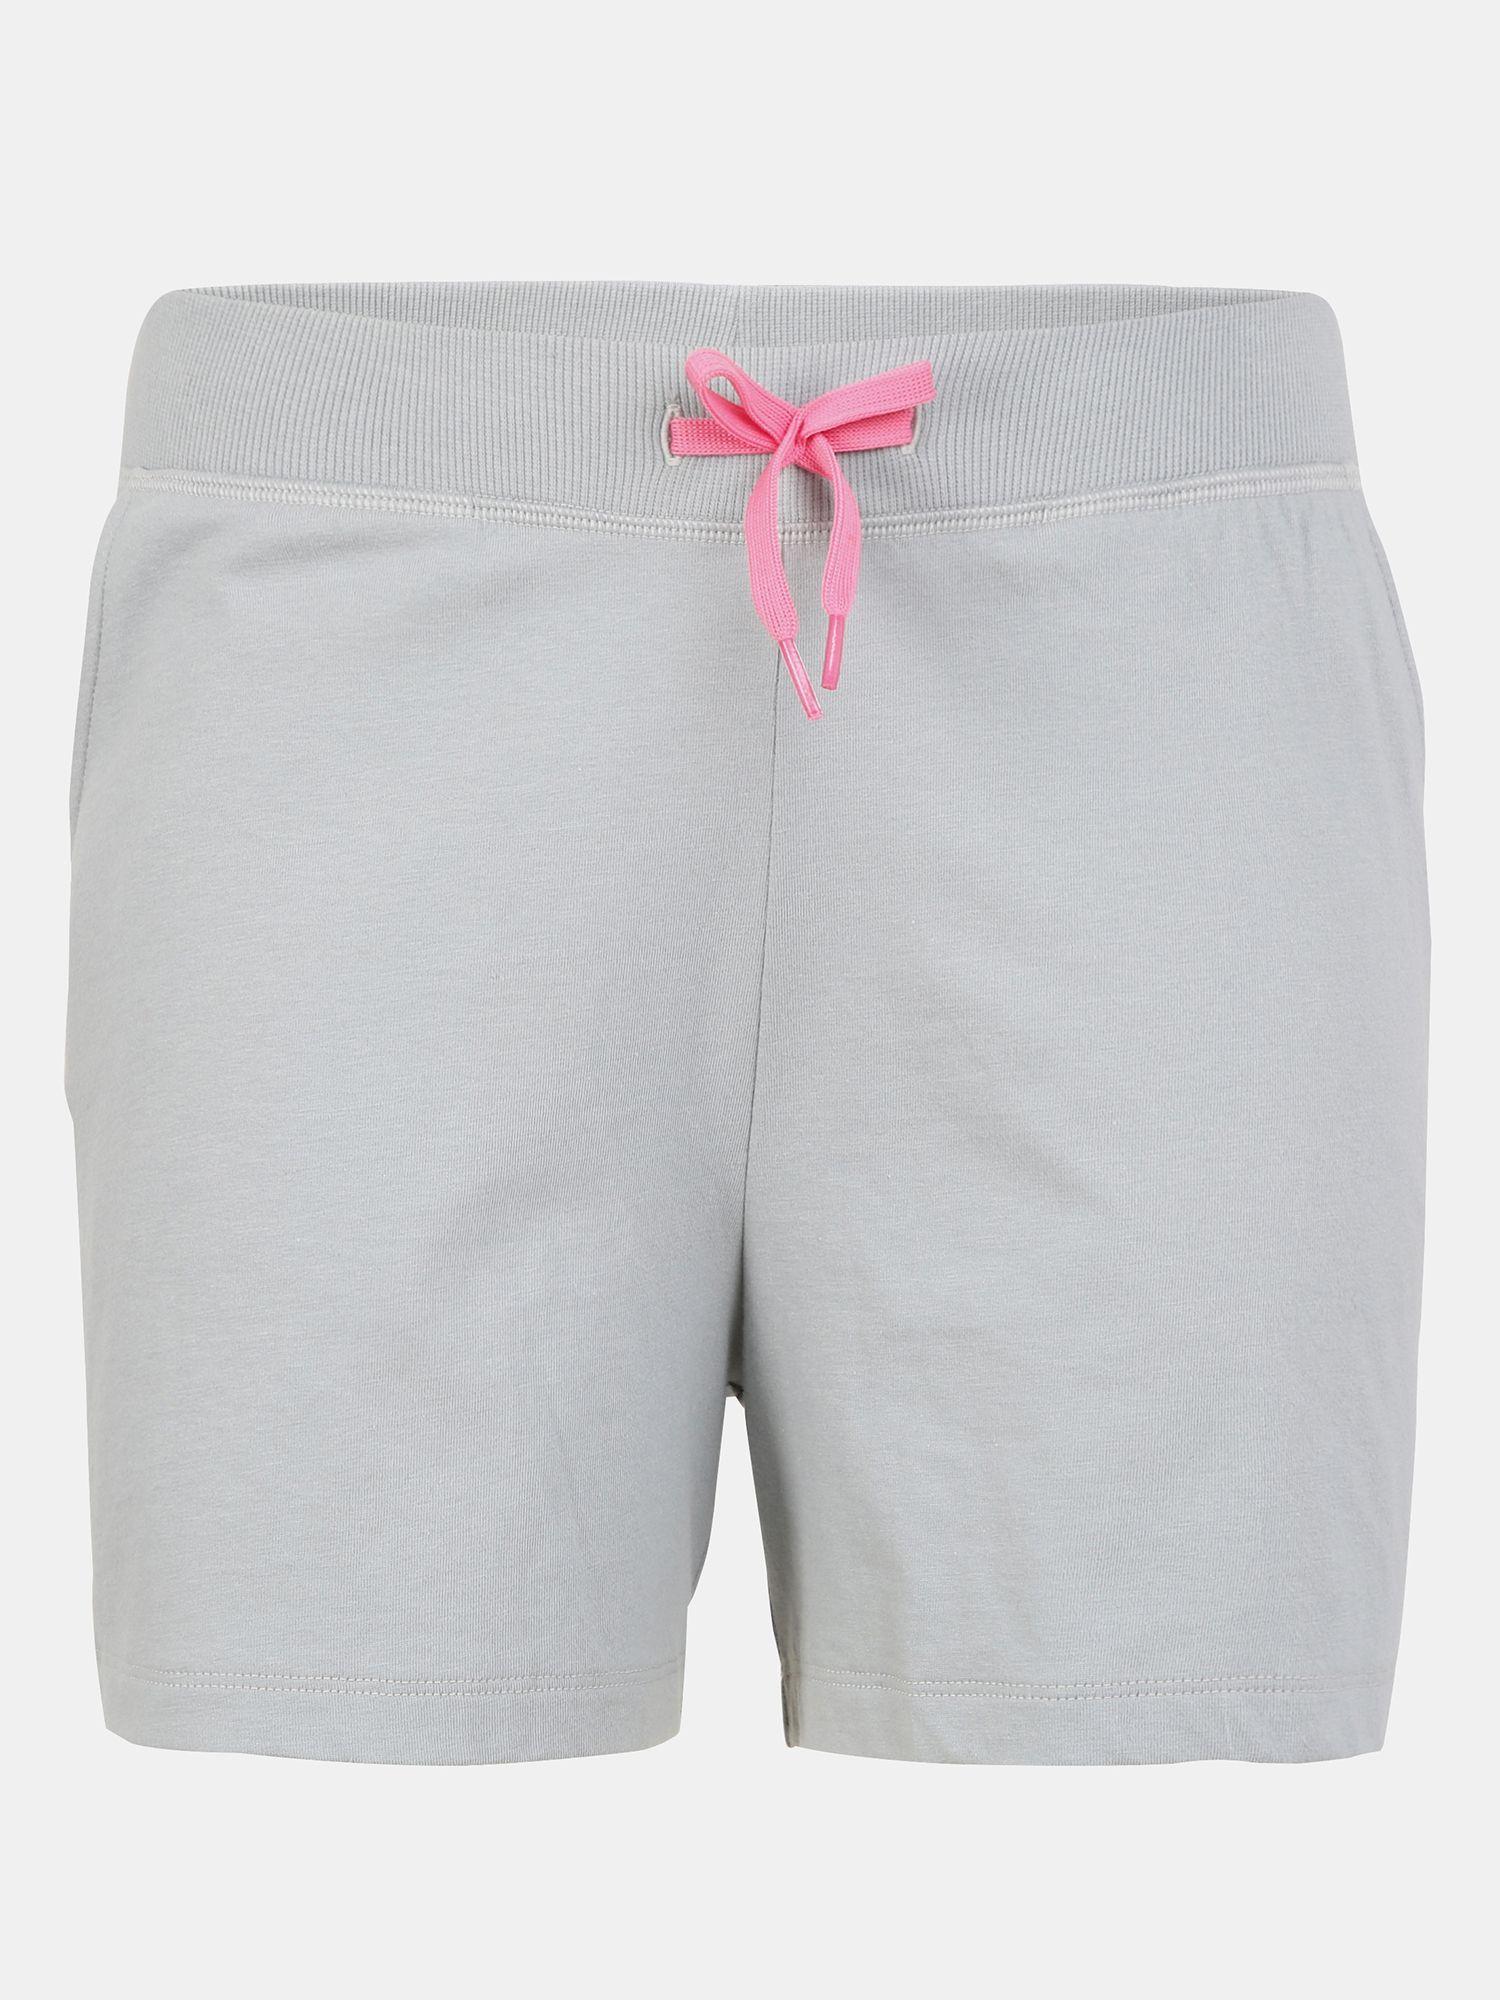 jockey ag63 cotton shorts for girls with side pockets & drawstring closure-grey